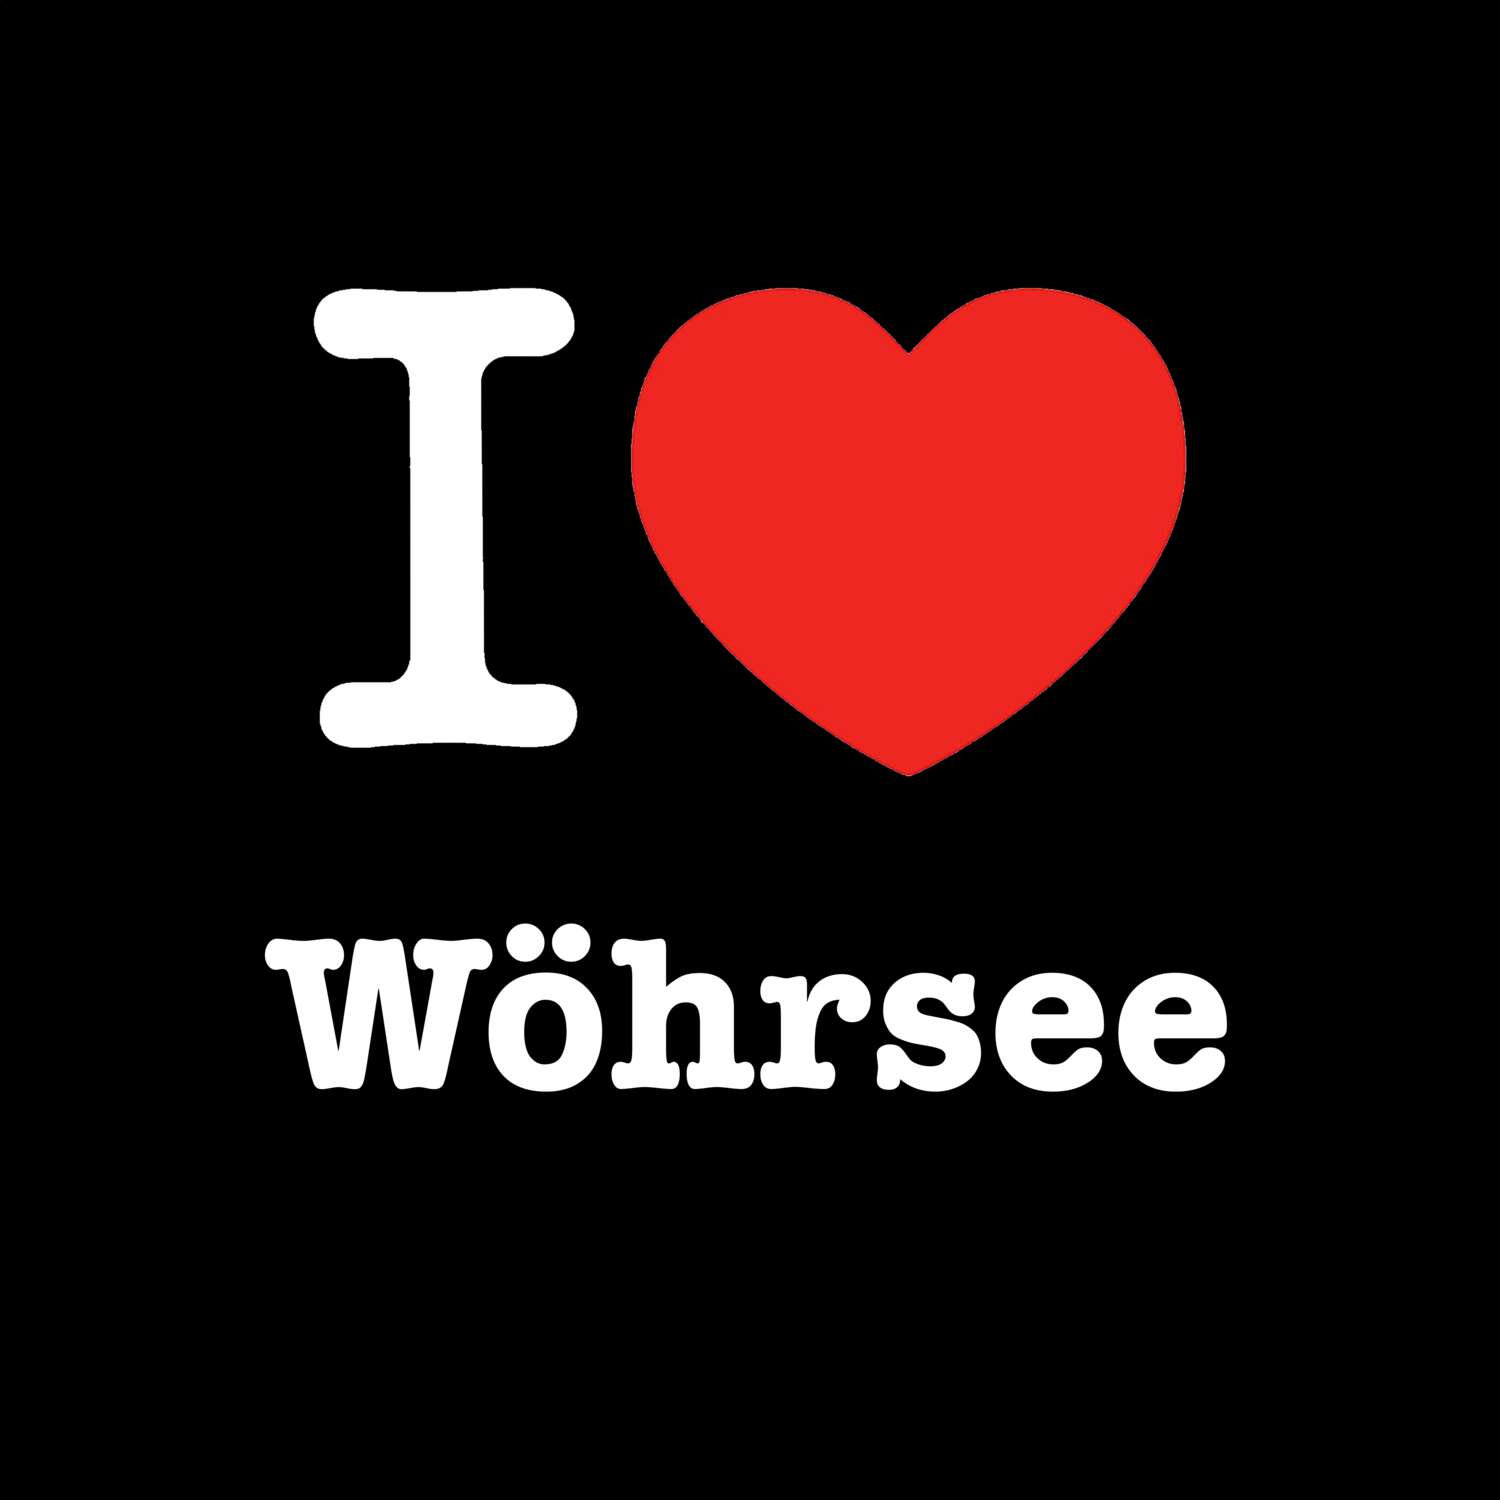 Wöhrsee T-Shirt »I love«